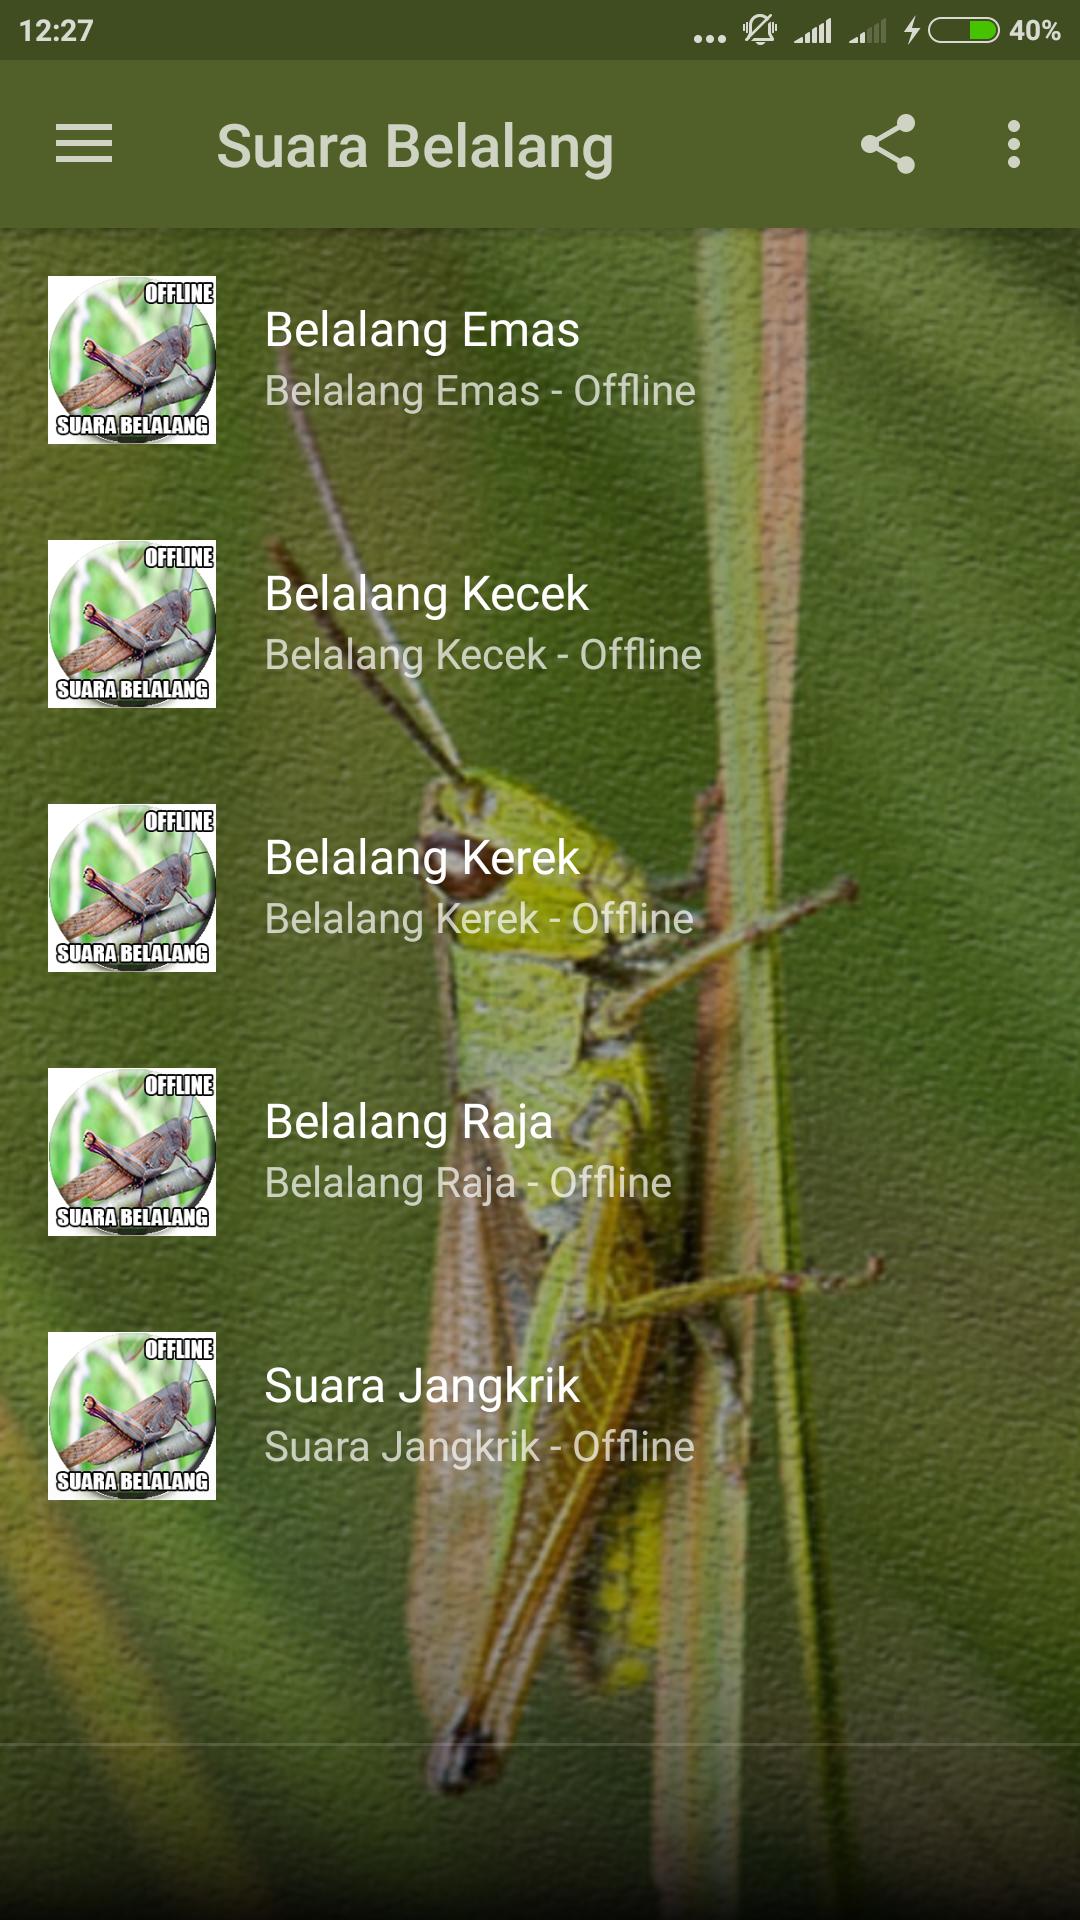 Suara Belalang for Android - APK Download